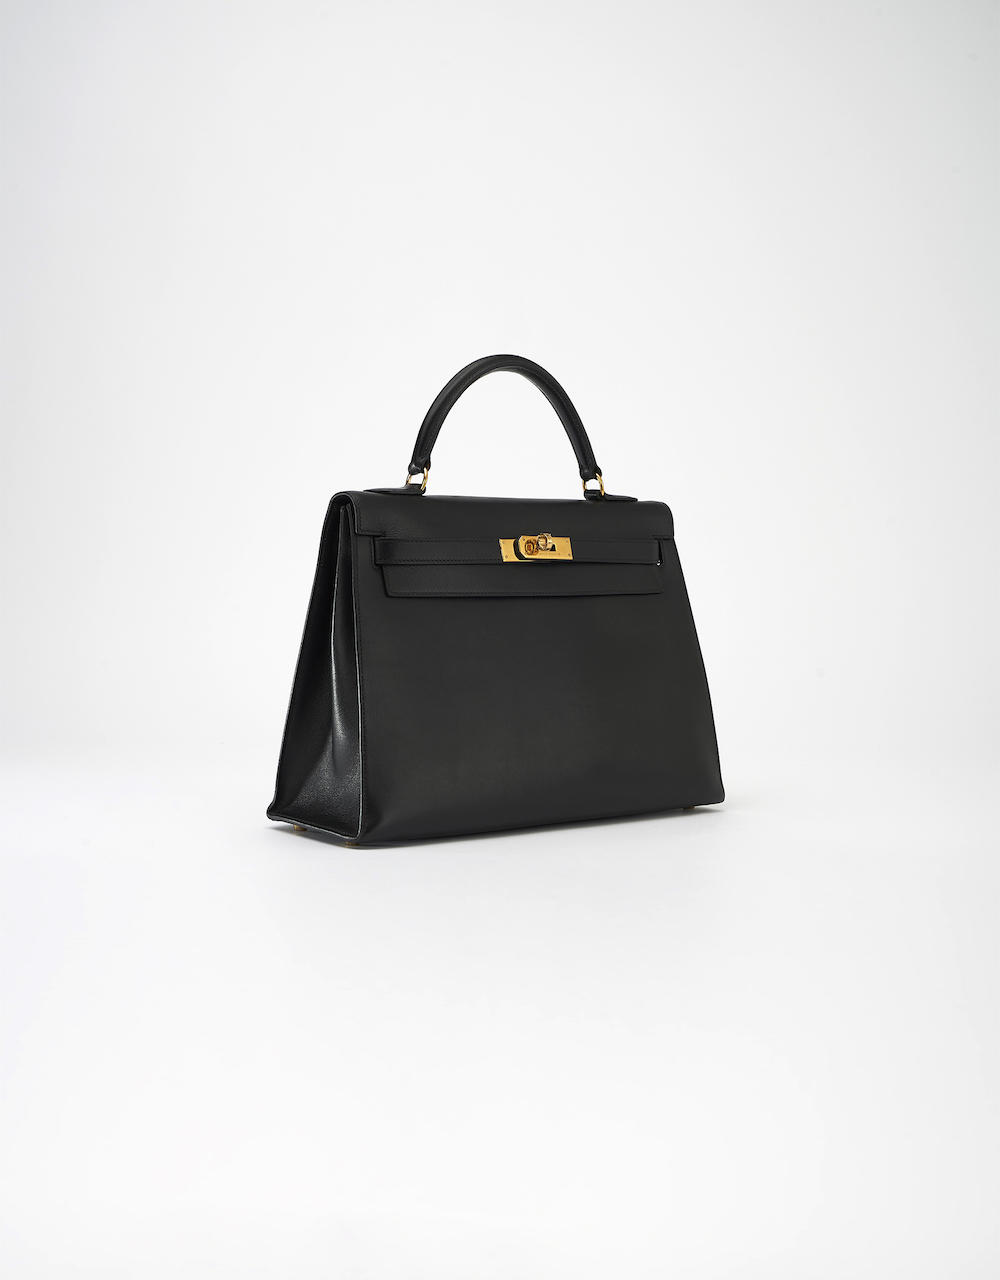 Hermes Birkin Handbag Noir Box Calf With Gold Hardware 40 at